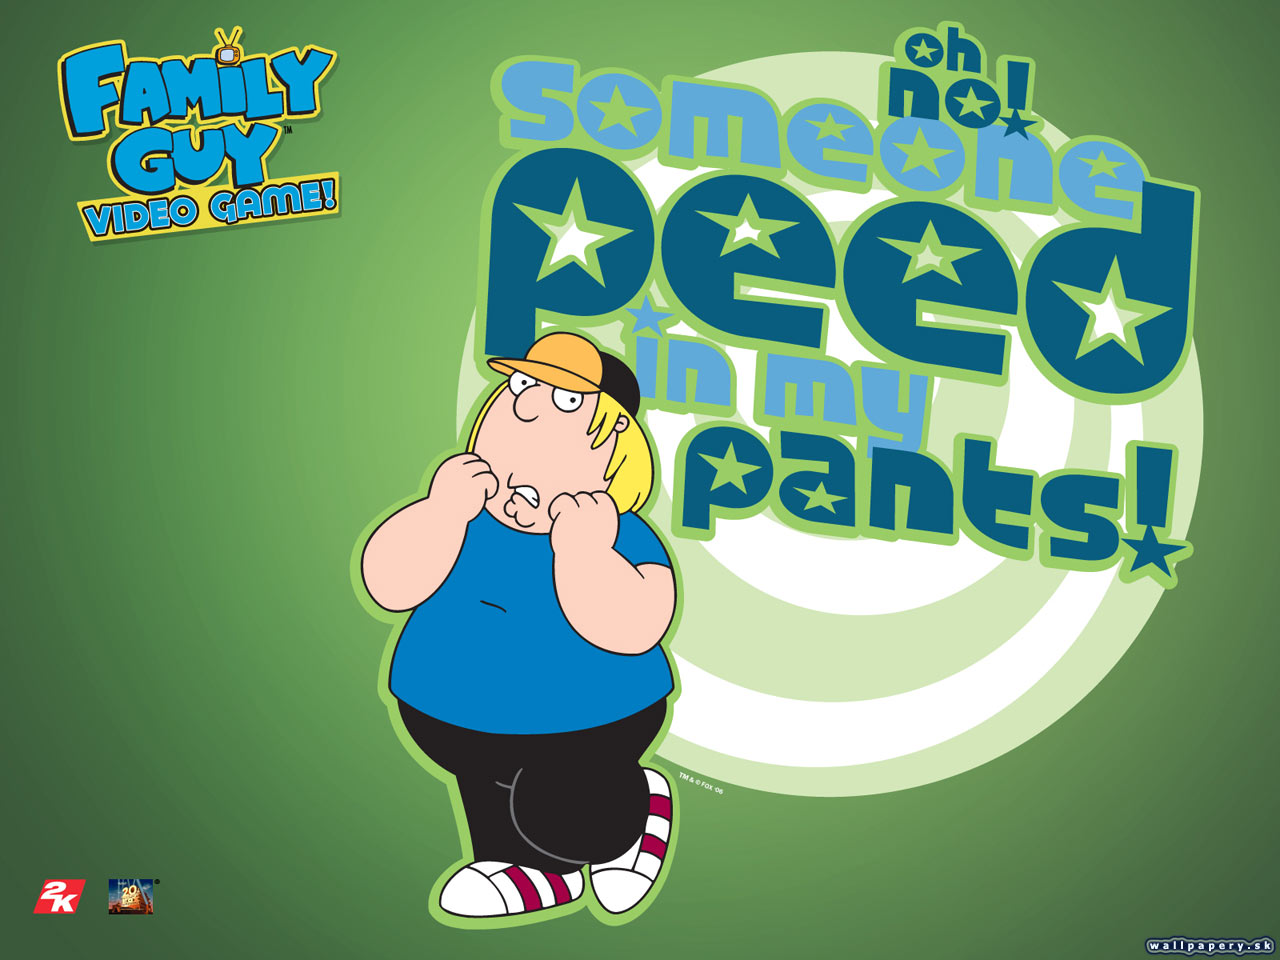 Family Guy: The Videogame - wallpaper 8